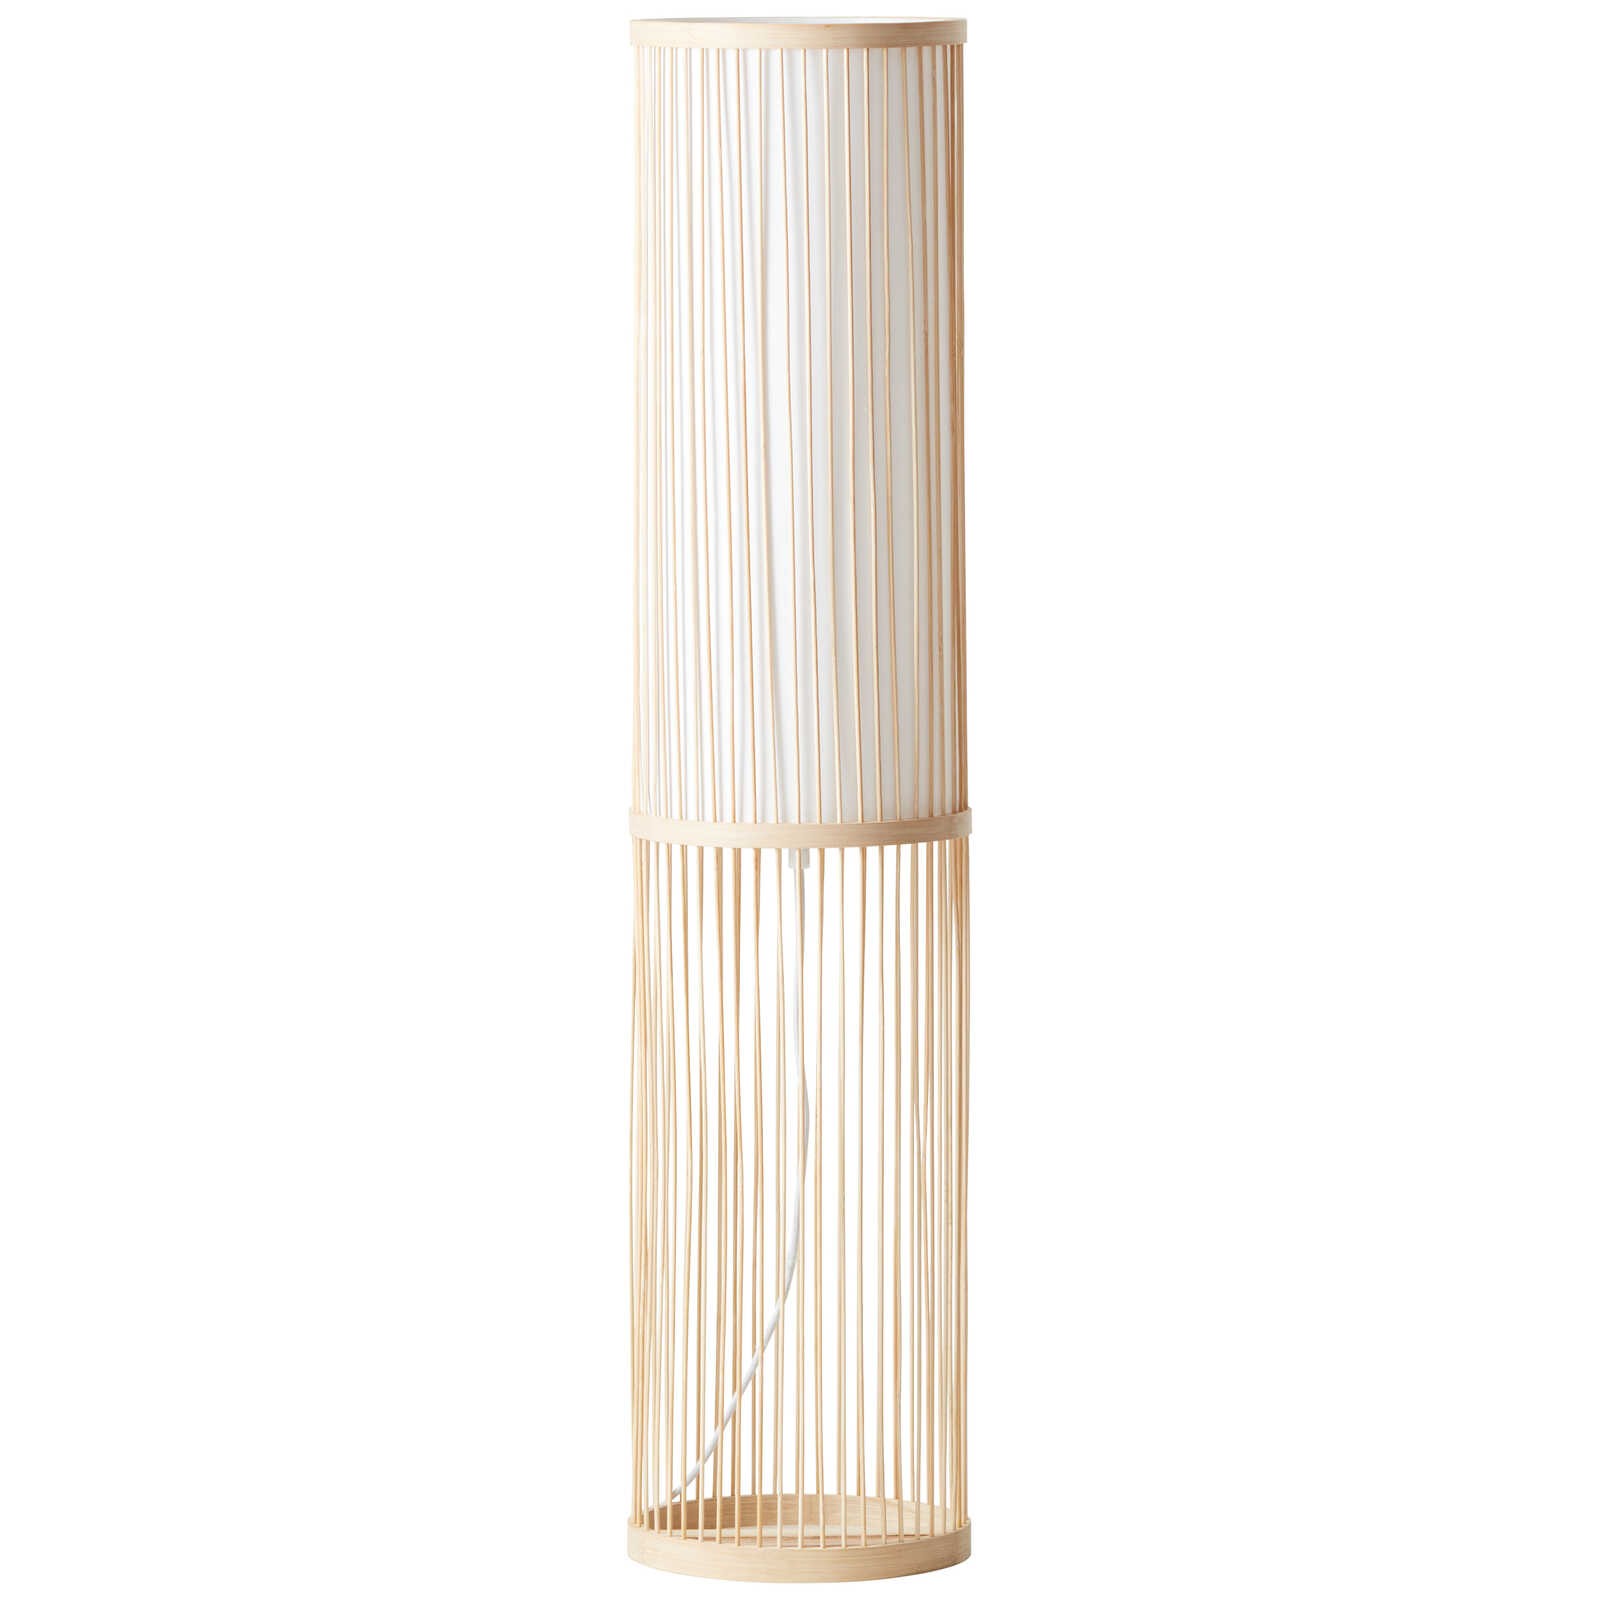             Lampada da terra in bambù - Luise 1 - Marrone
        